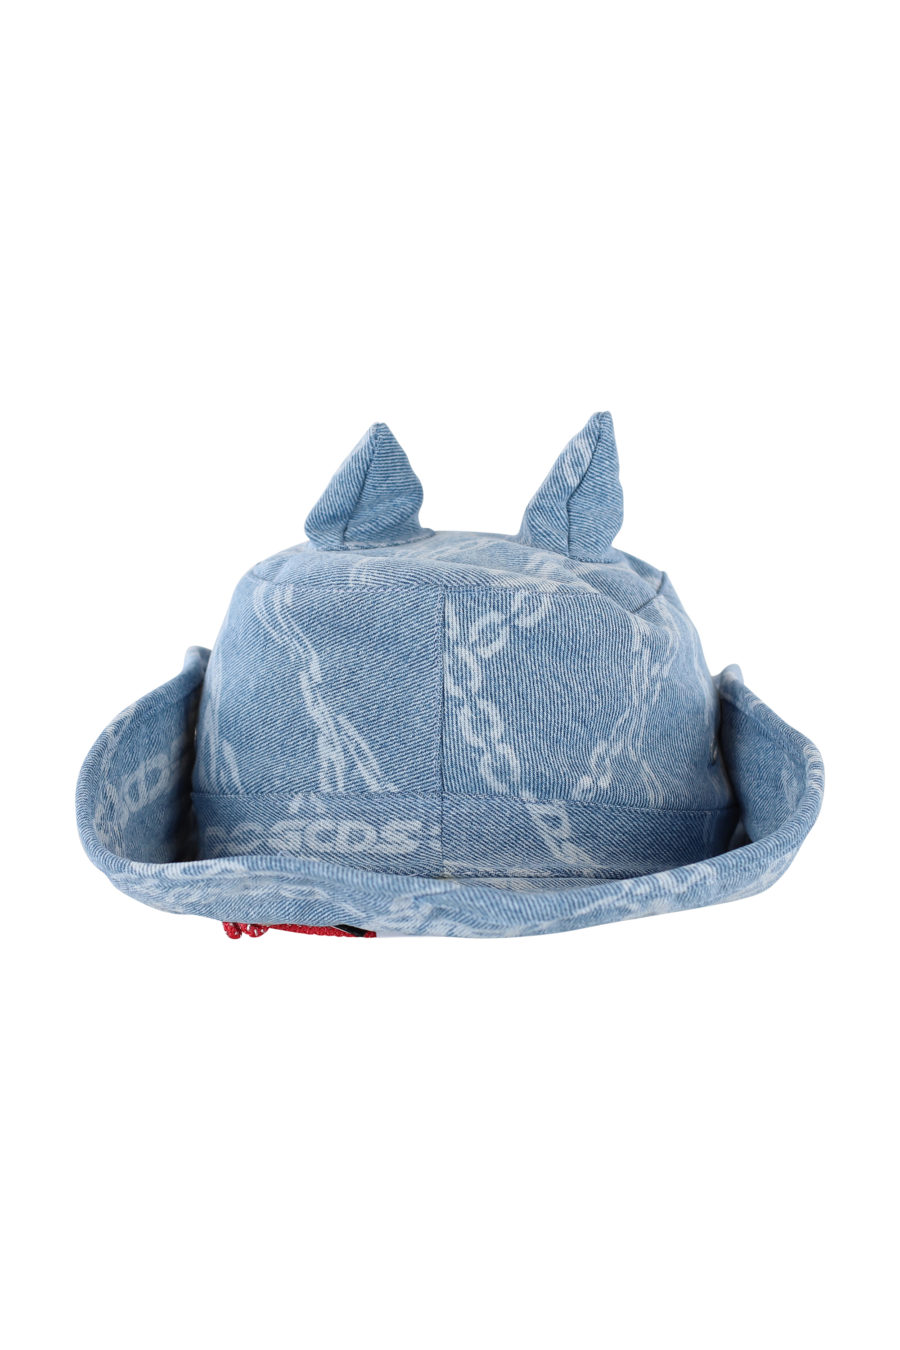 Sombrero azul denim - IMG 1558